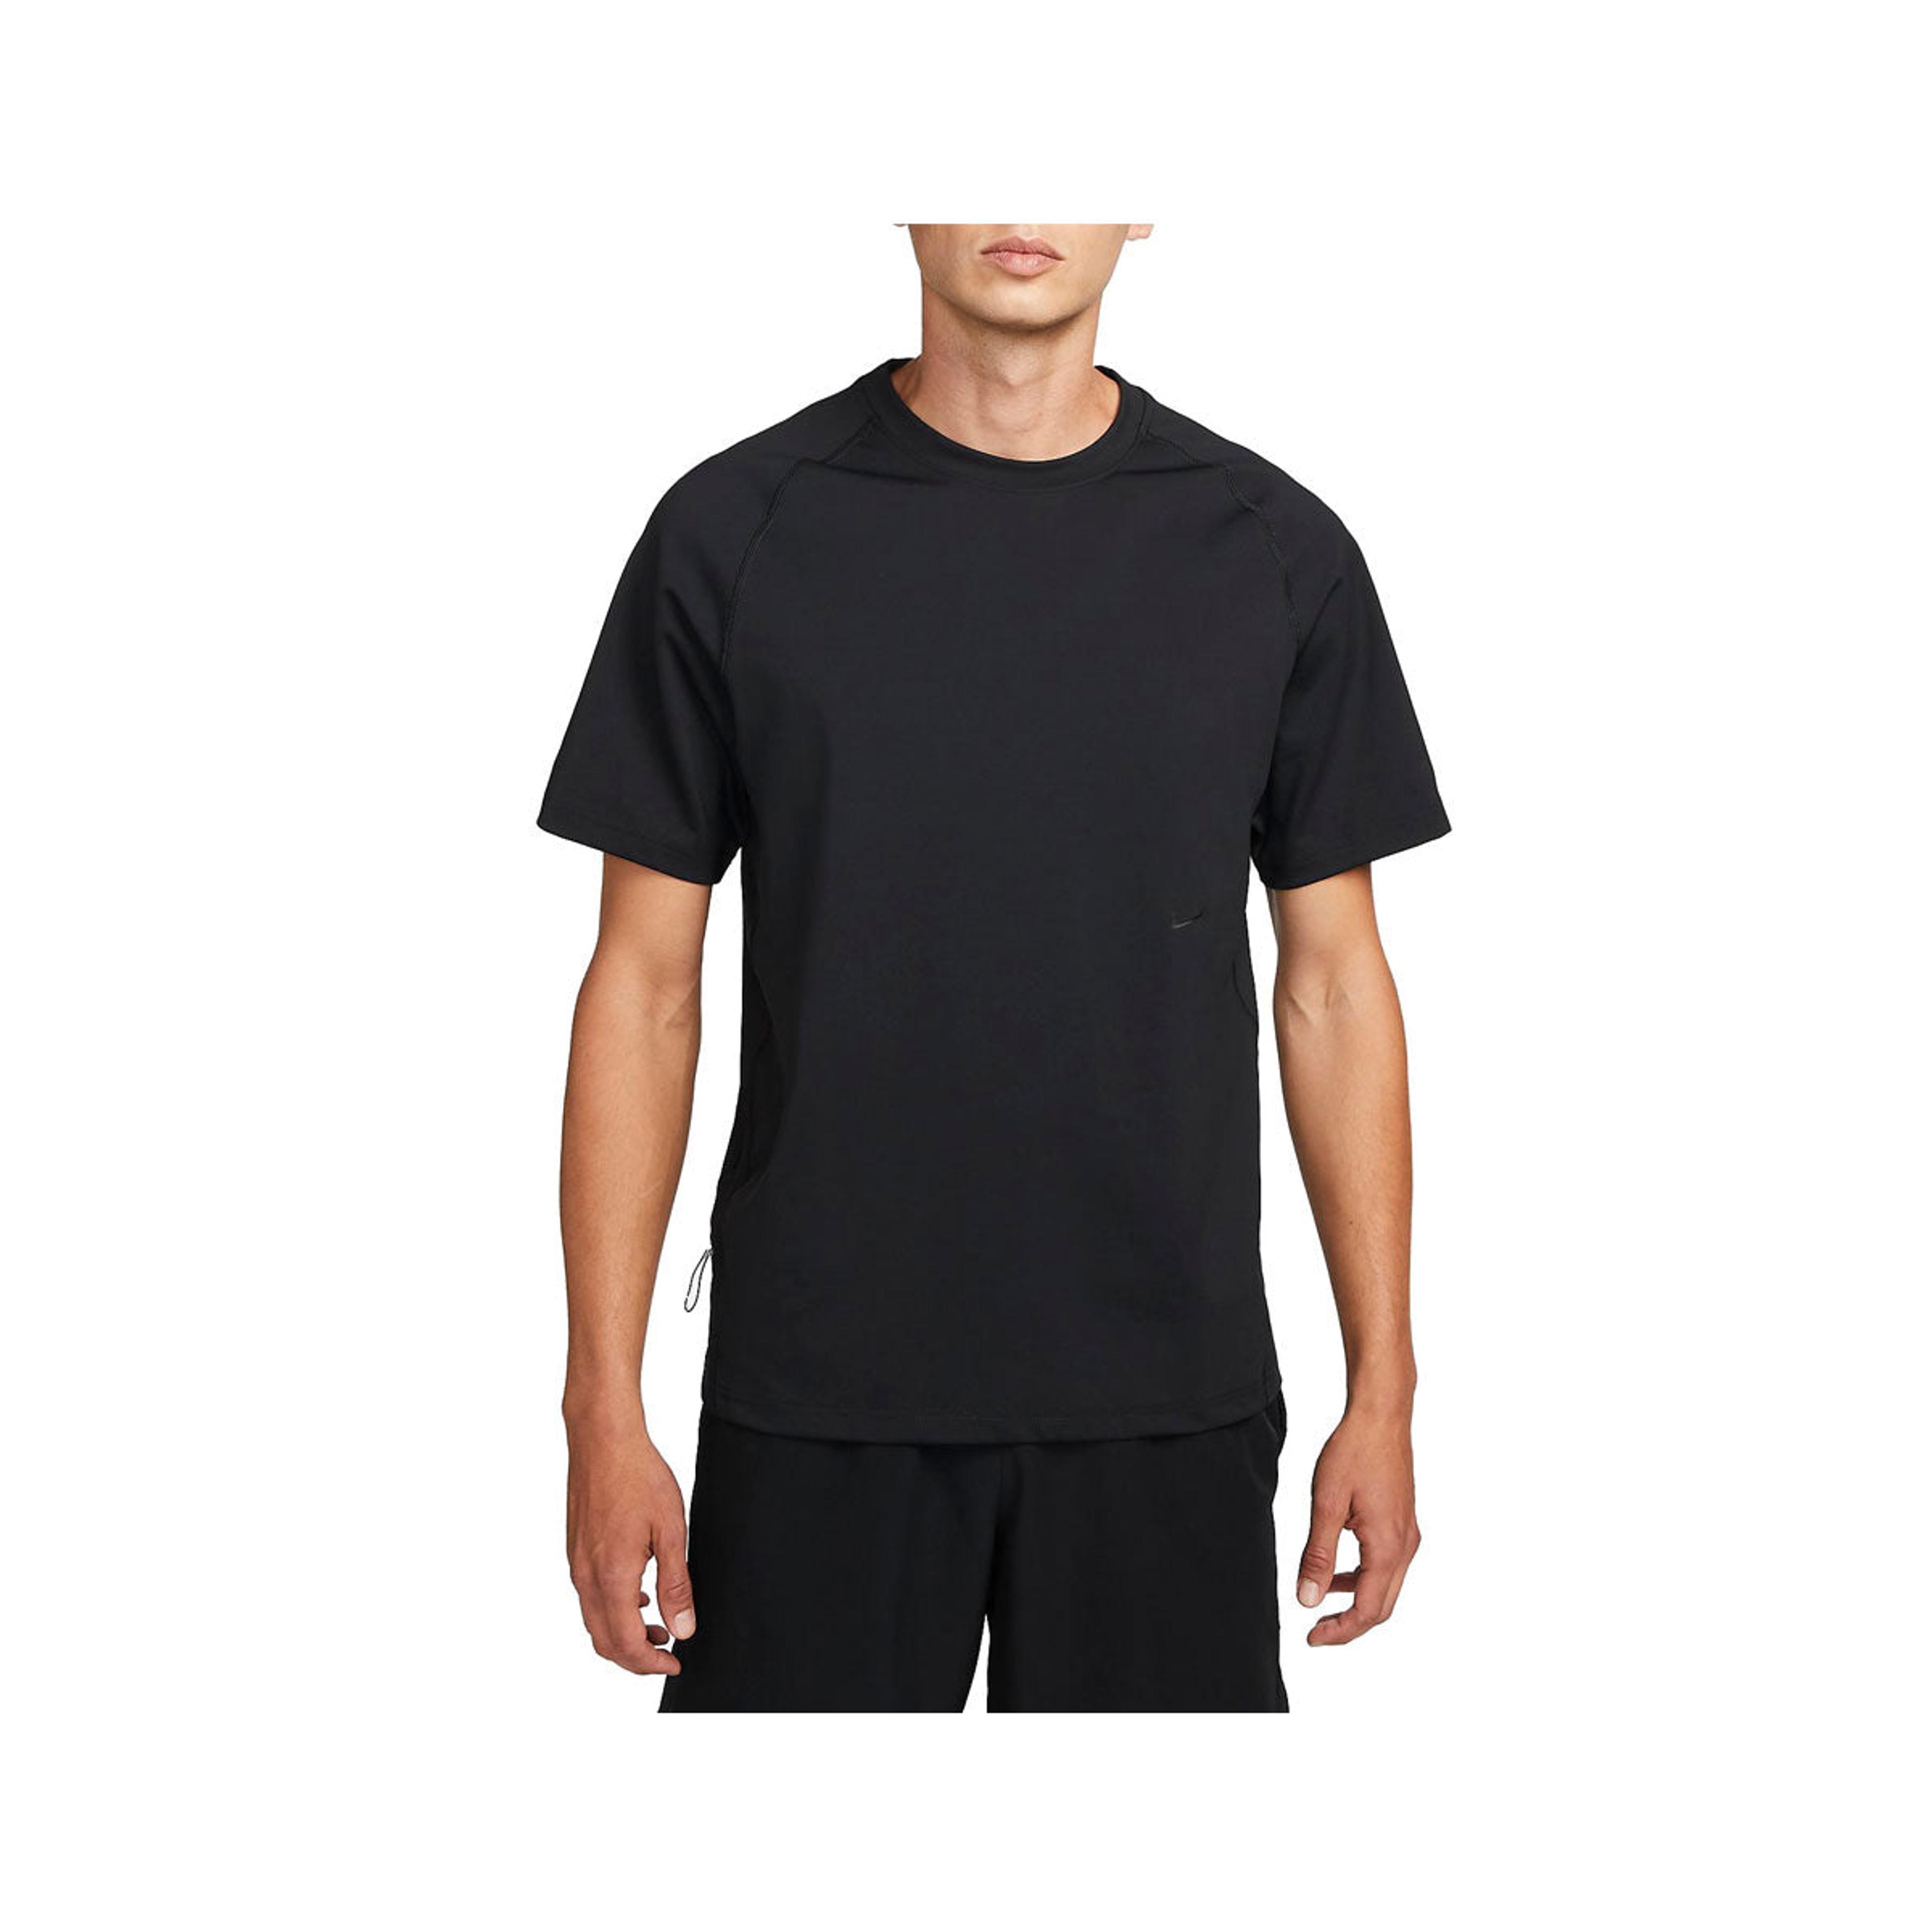 Nike Men's Dri-FIT . Short-Sleeve Fitness Top